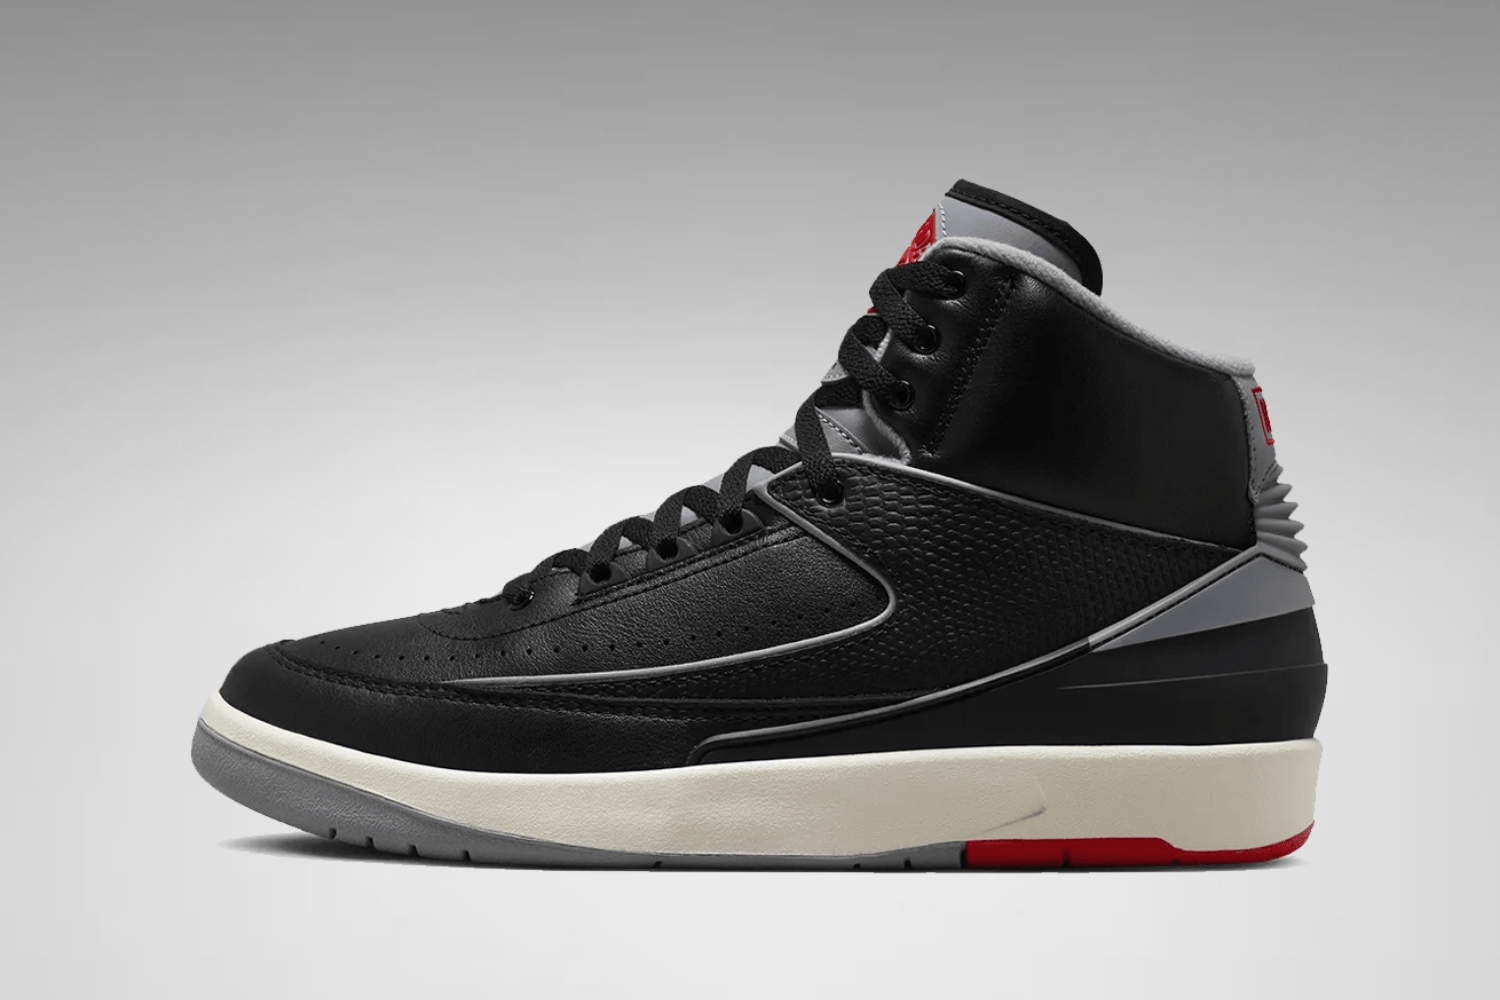 The 'Black Cement' colorway returns on the Air Jordan 2